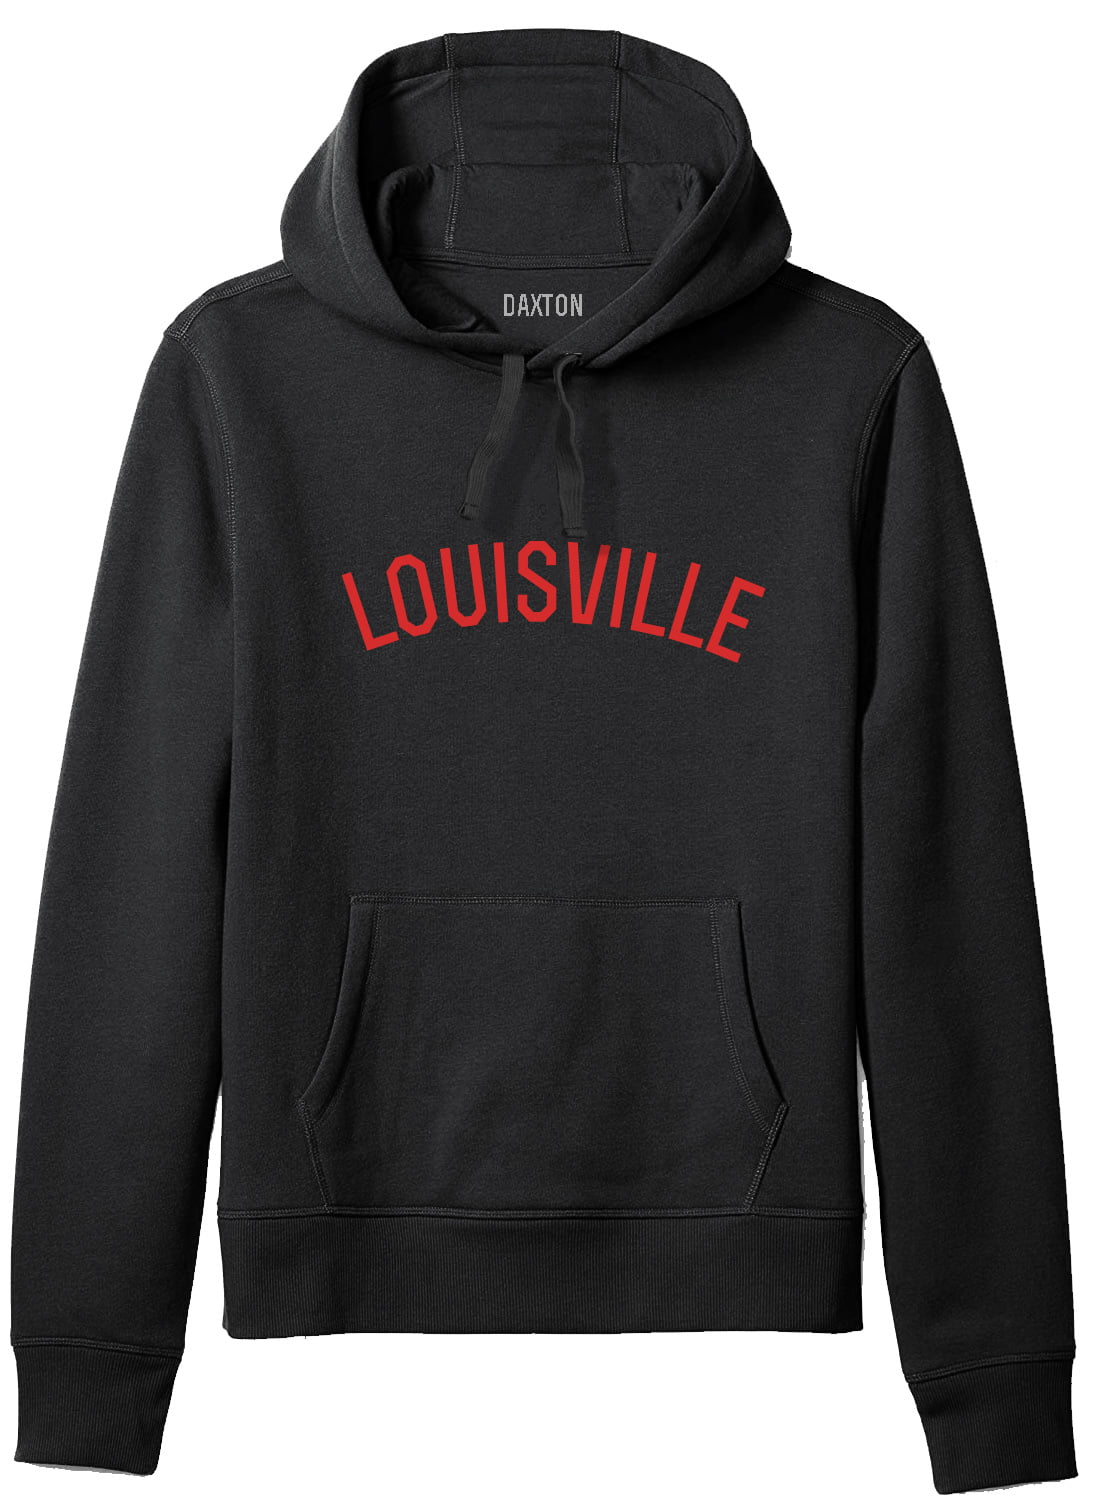 Daxton Adult Unisex Soft Pullover USA Cities States Comfort Hoodie Fleece  Sweatshirt, Louisville Black Red, M 